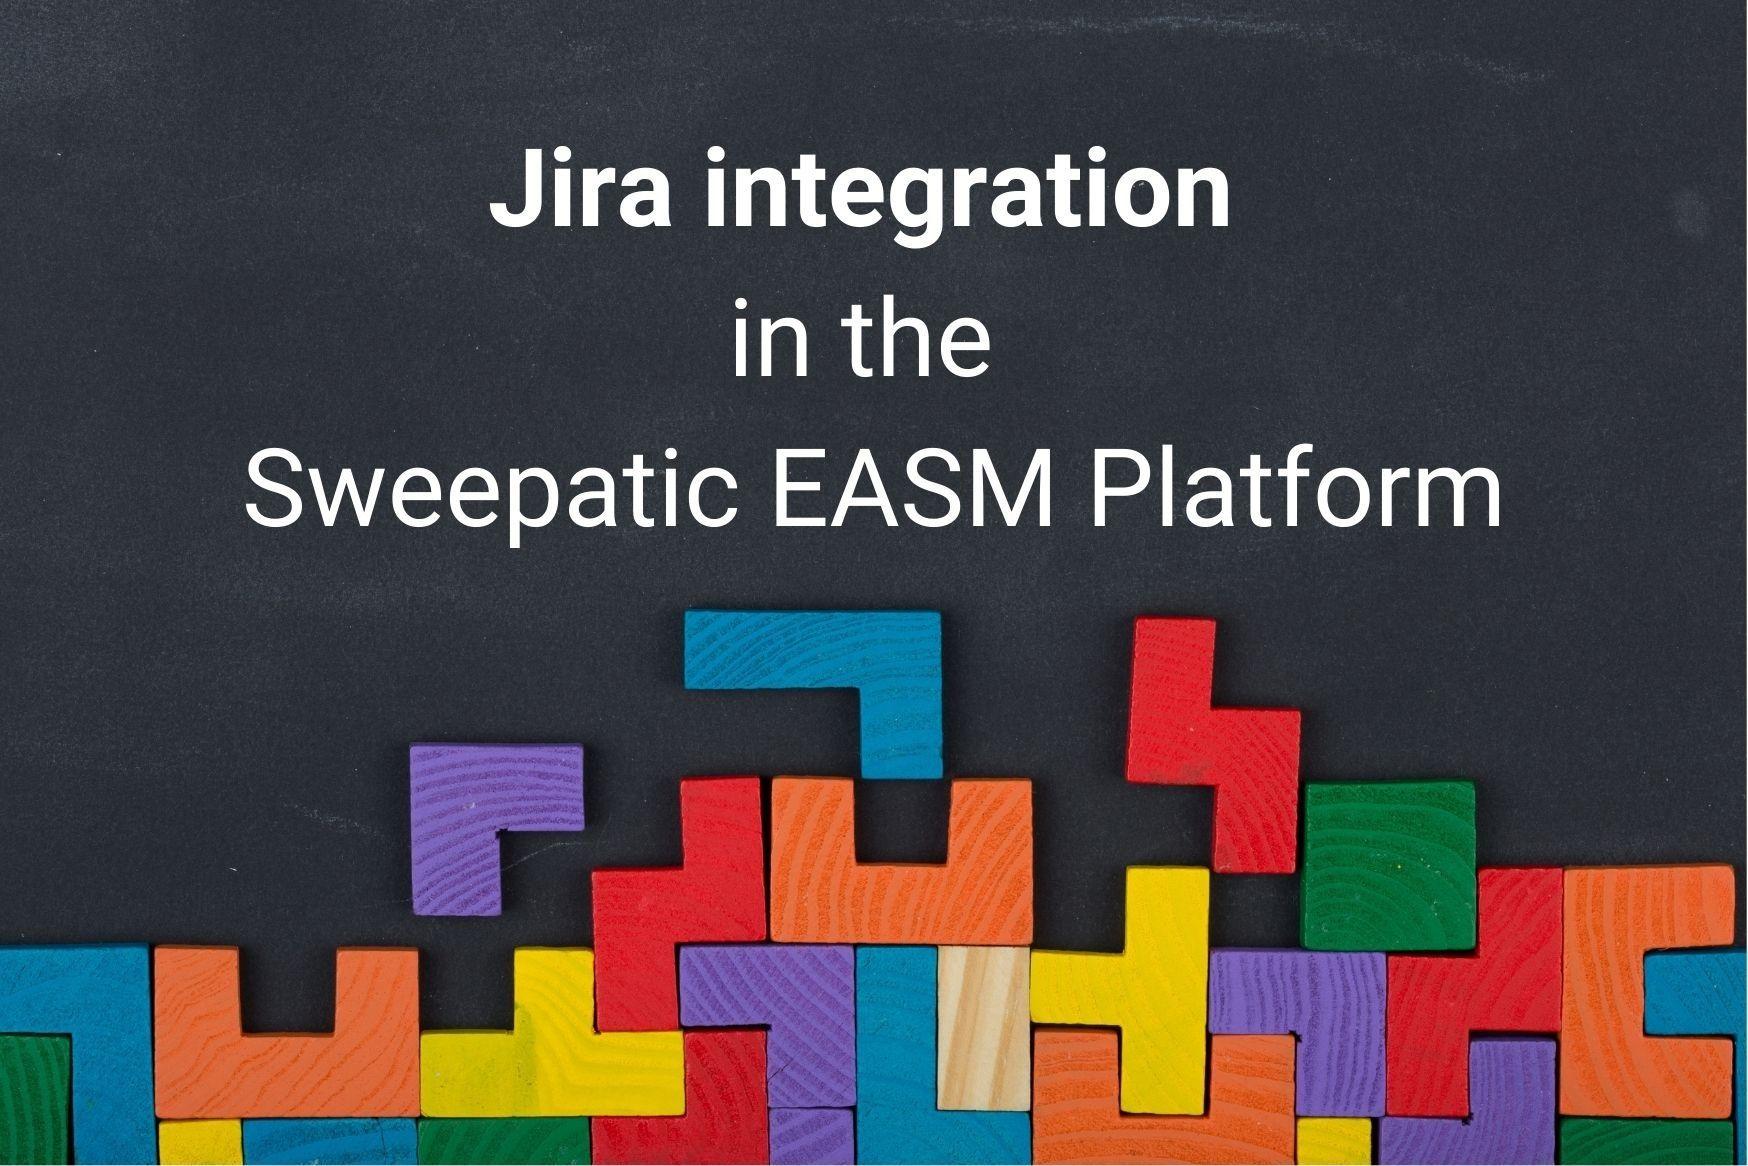 Sweepatic EASM Platform offers Jira ticketing system integration